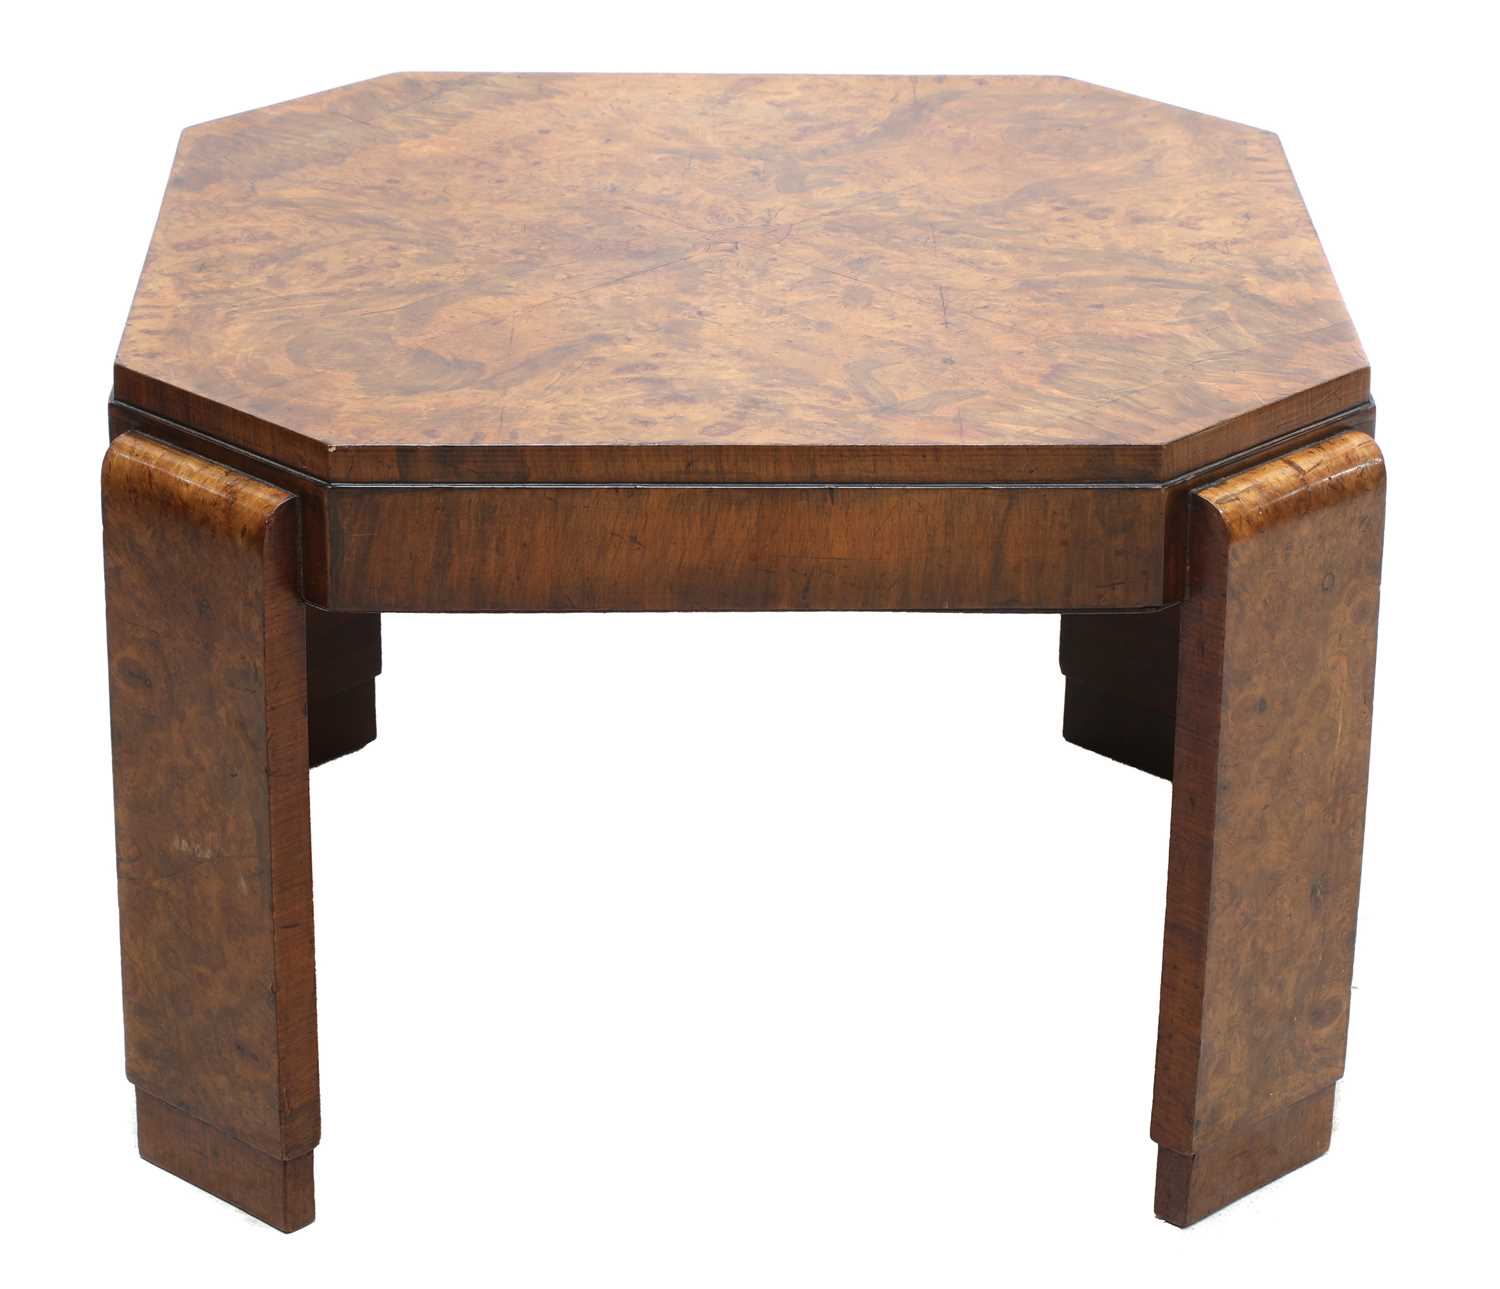 Lot 119 - An Art Deco walnut coffee table